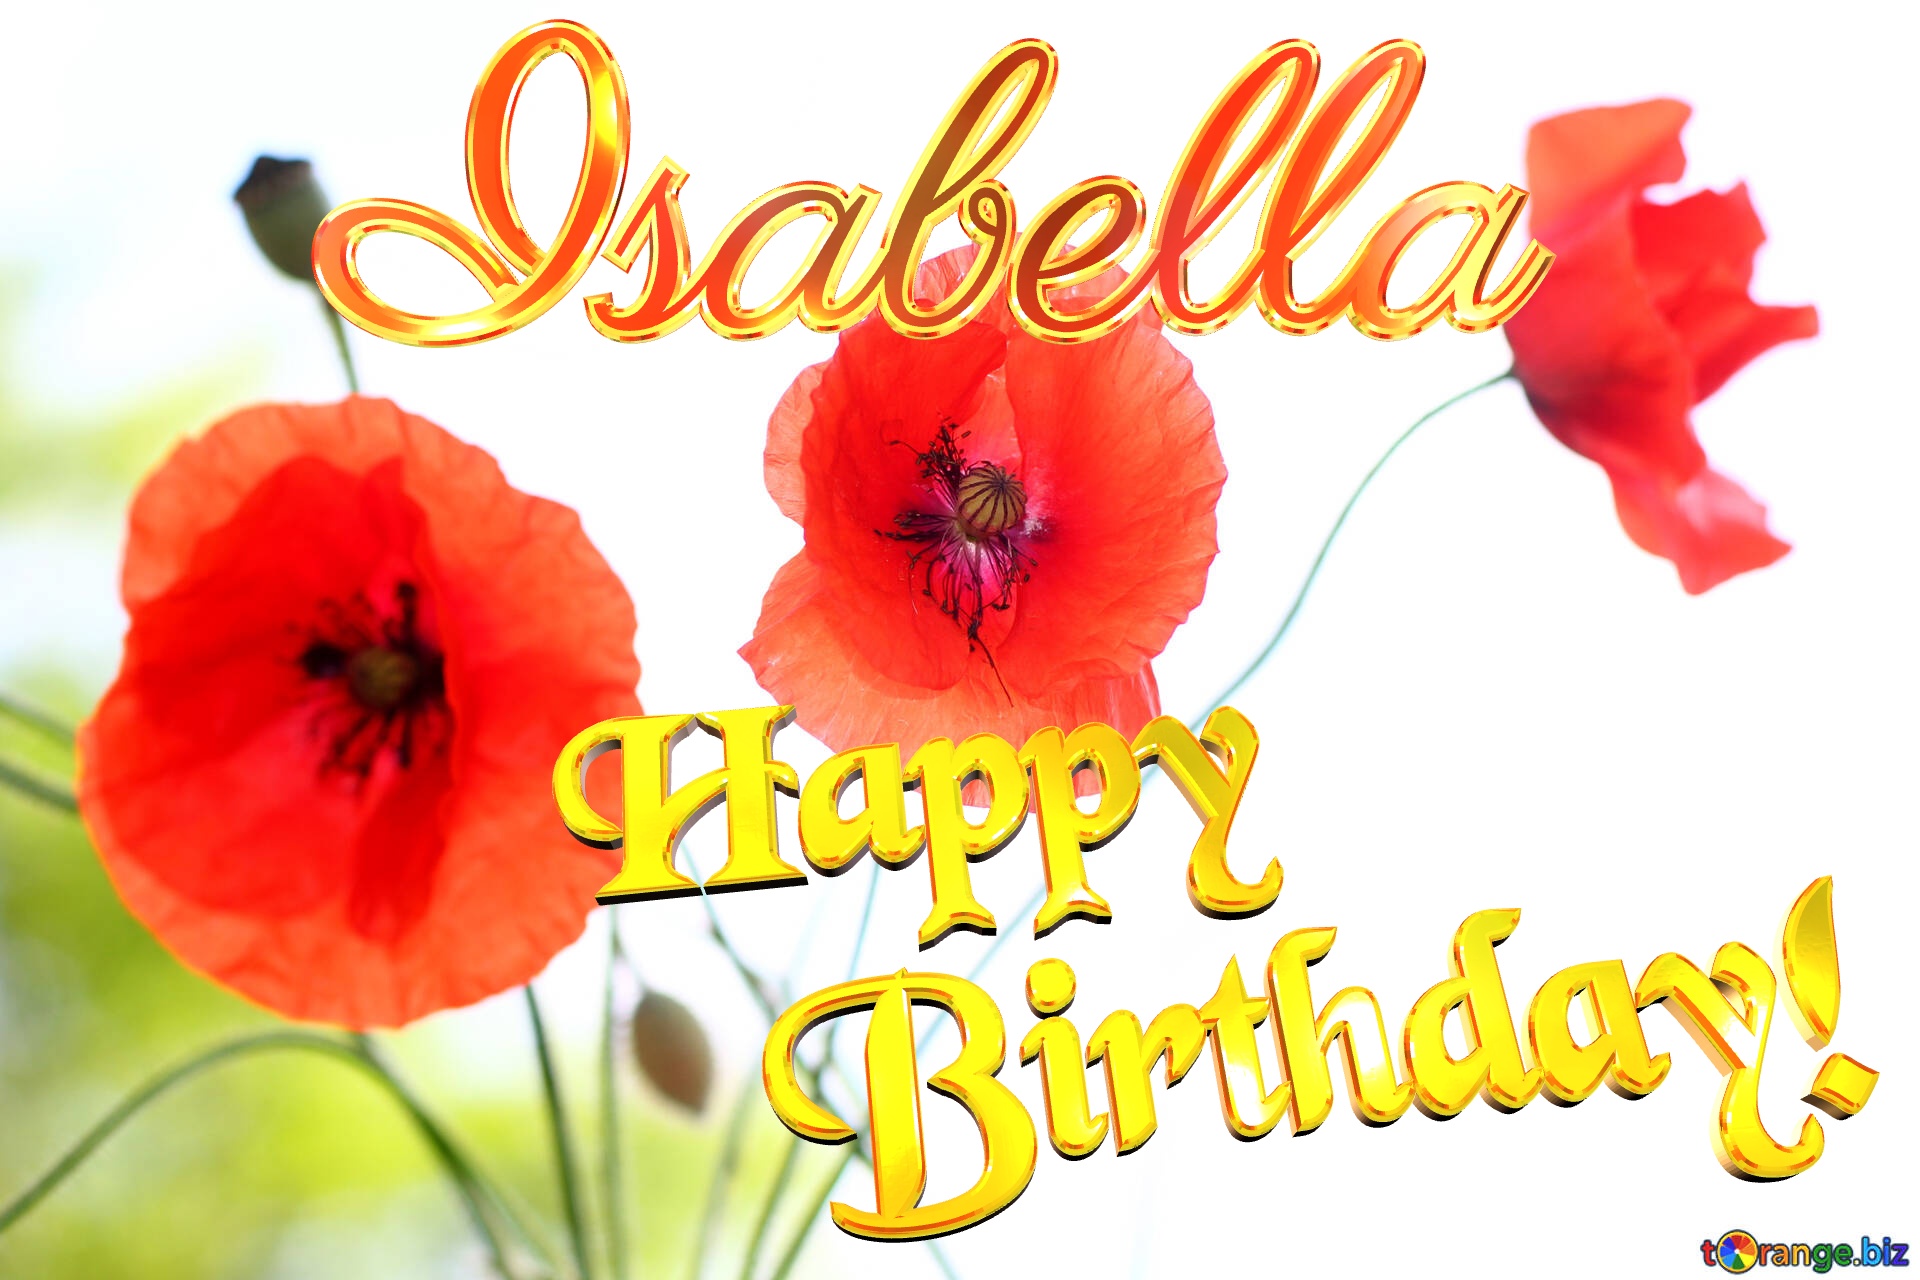 Poppy Isabella Happy Birthday! Beautiful wallpapers for desktop poppy №37060